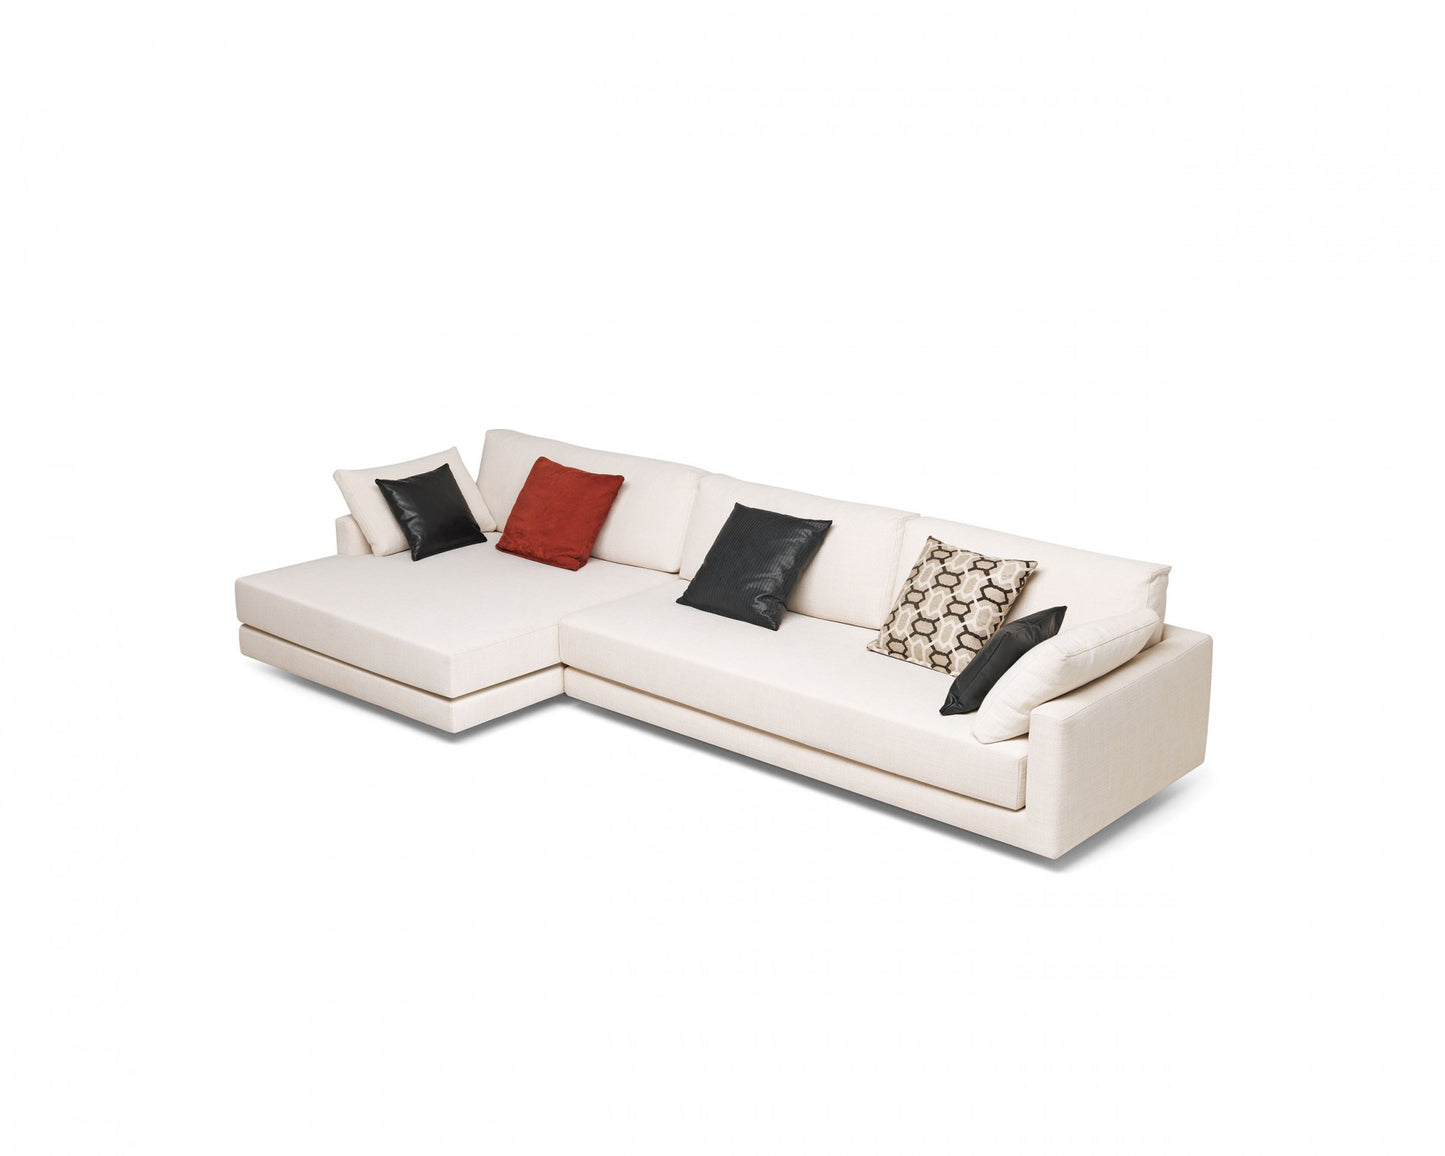 ARGO | Sectional sofa by MisuraEmme